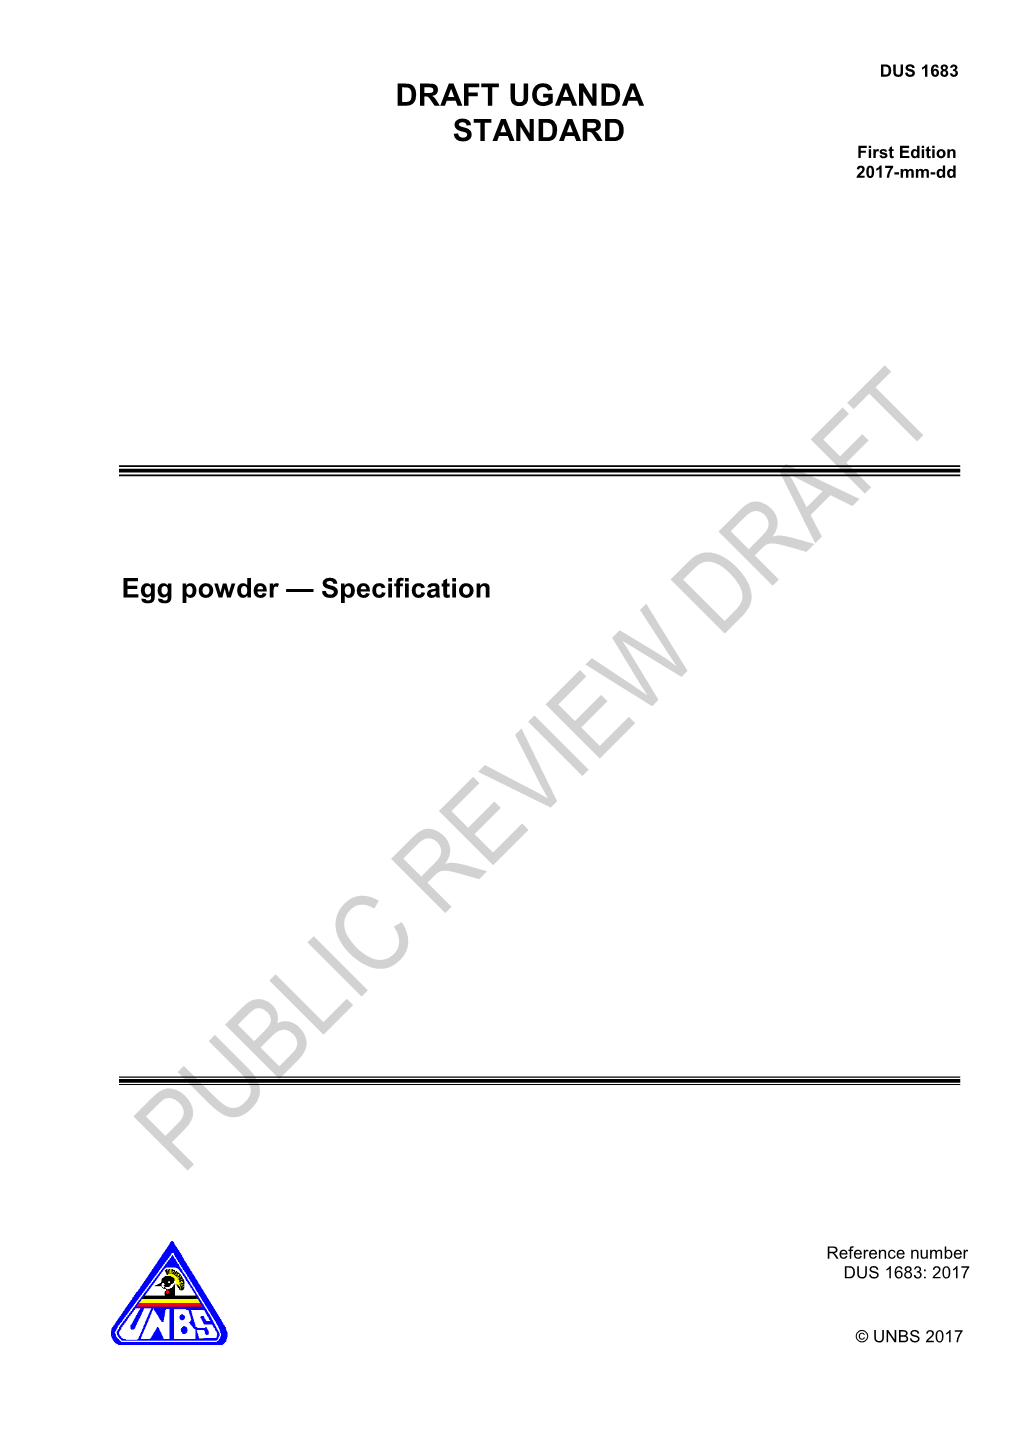 Egg Powder — Specification